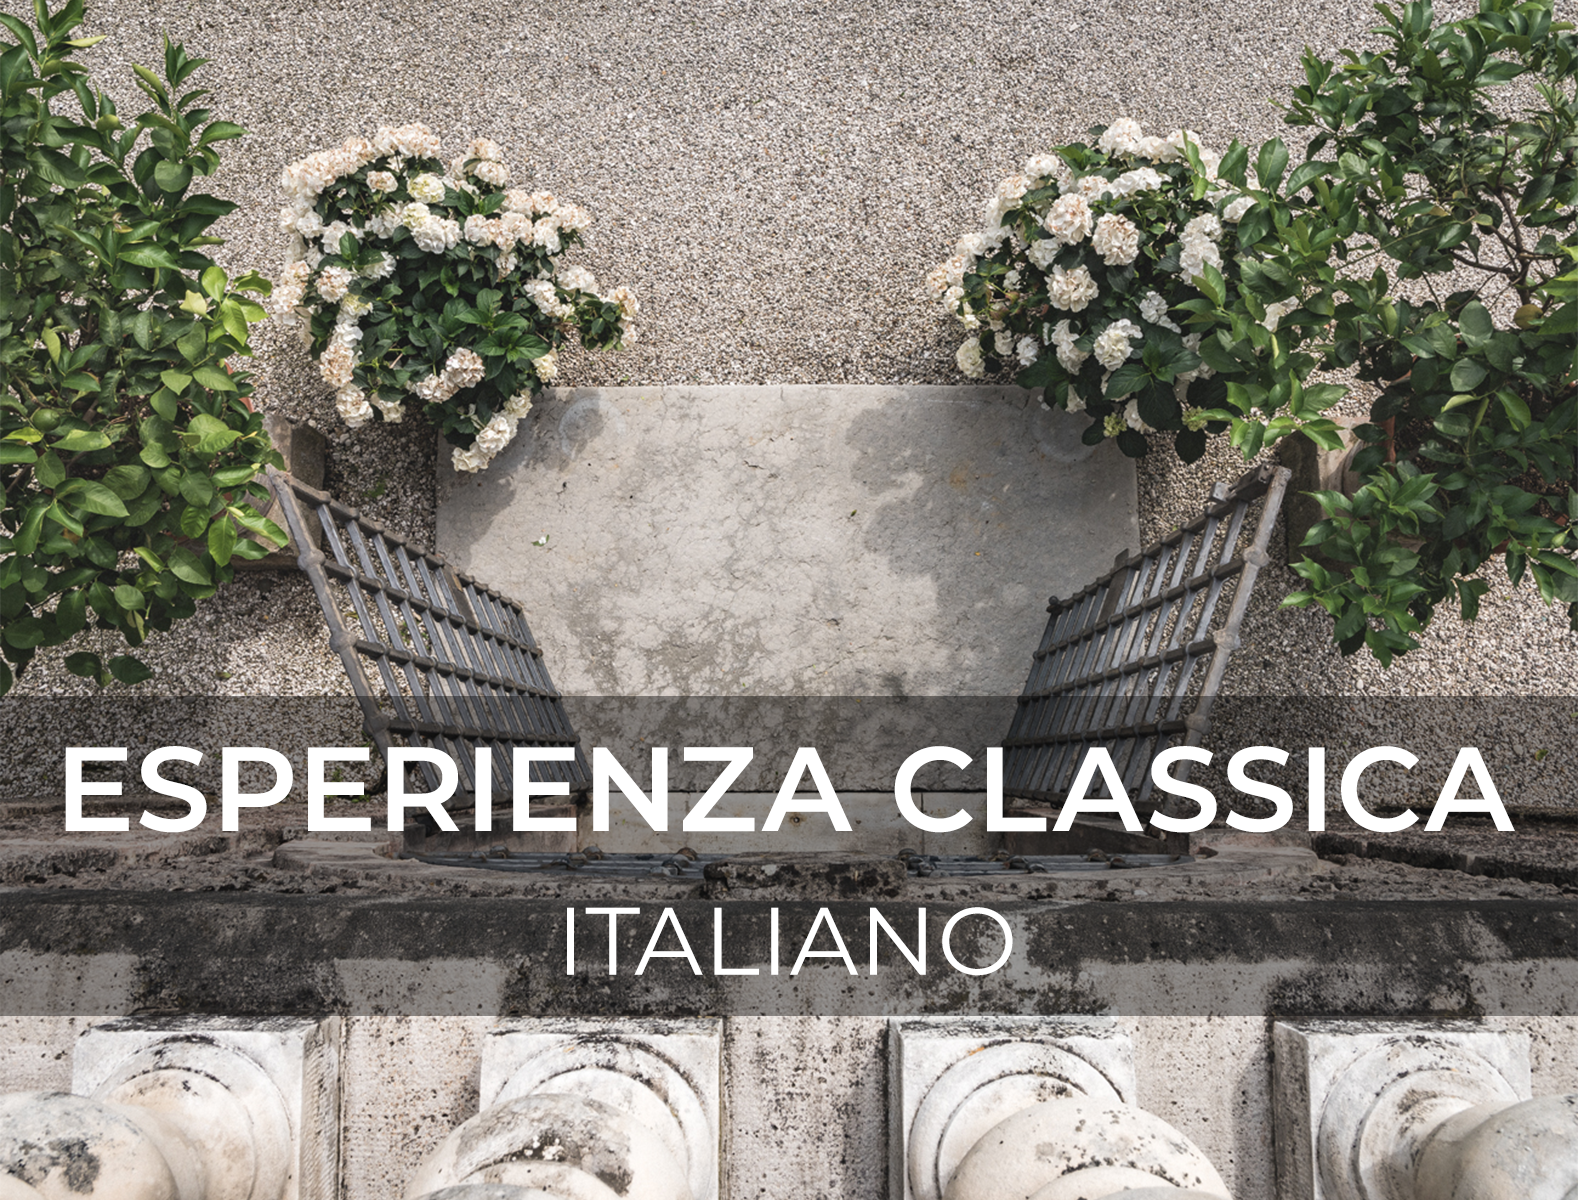 CLASSIC EXPERIENCE - ITALIAN